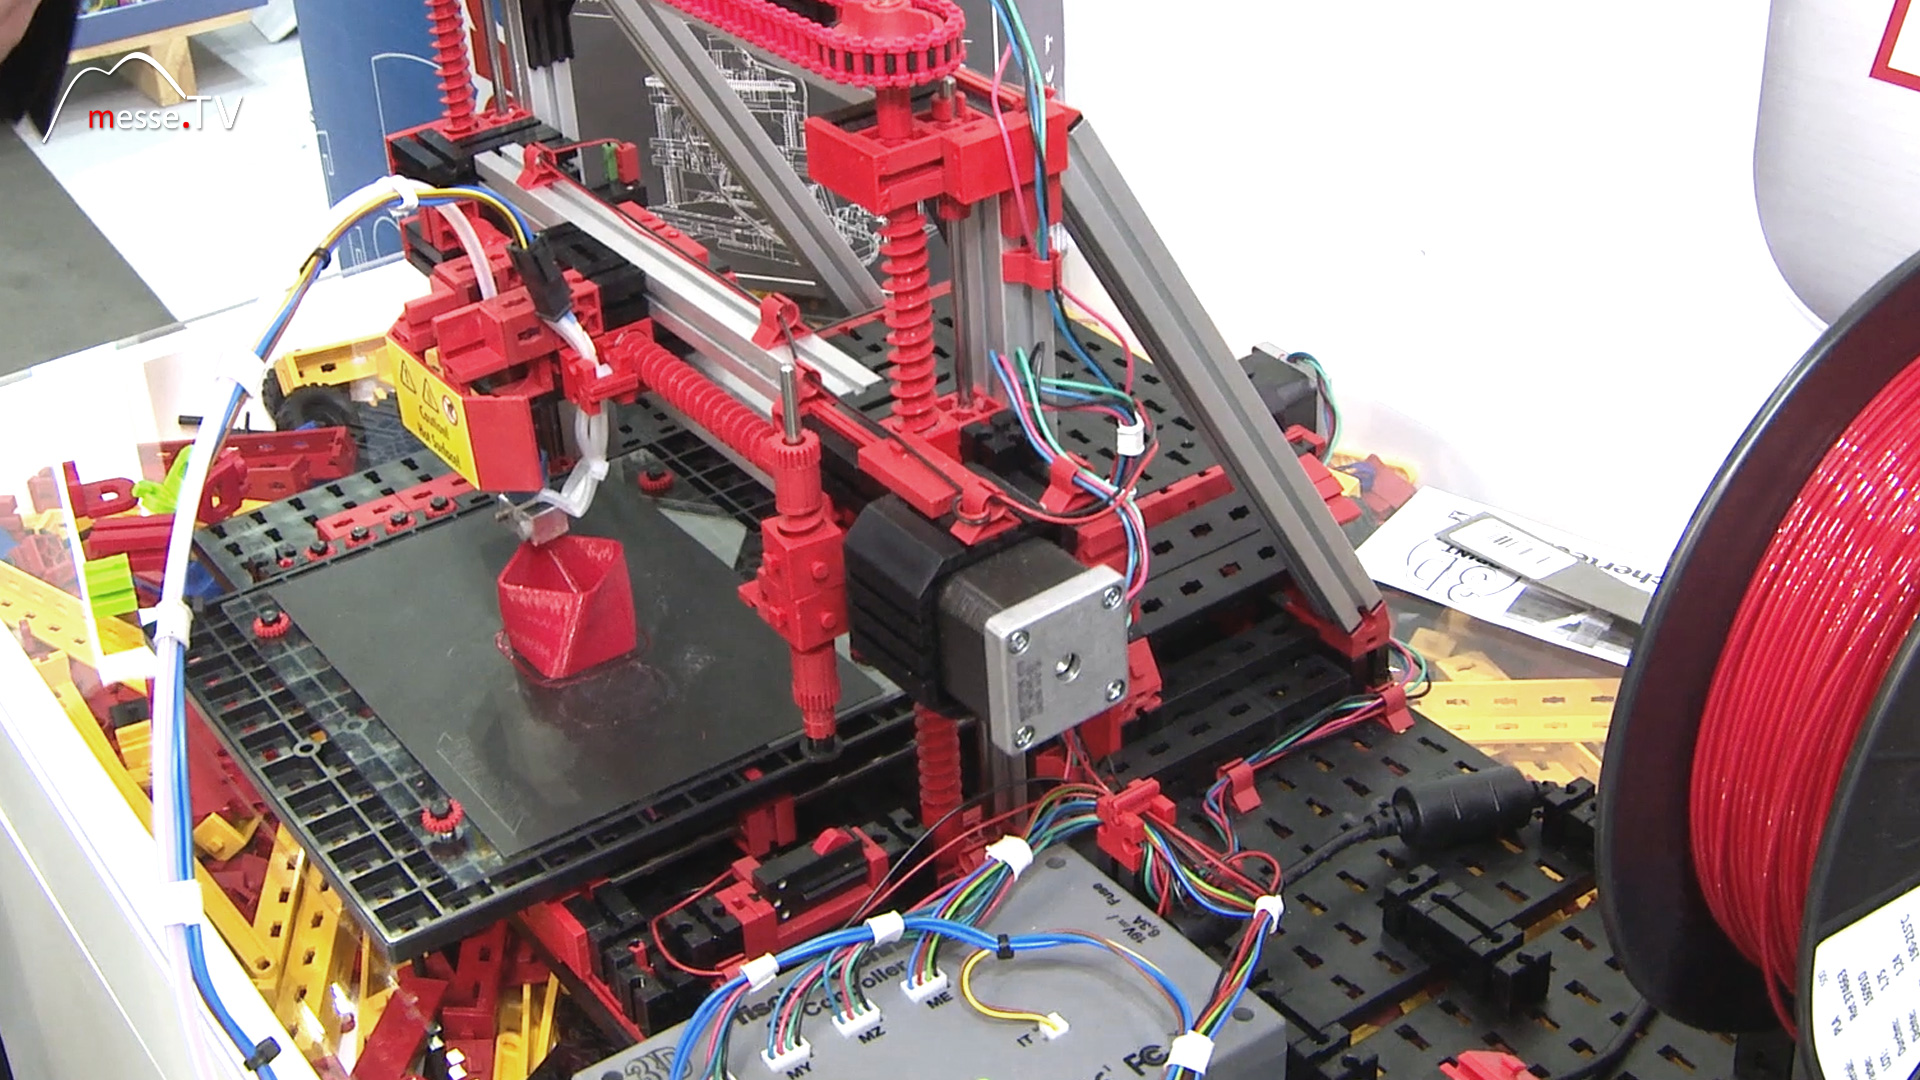 3D printer self assembly kit fischertechnik